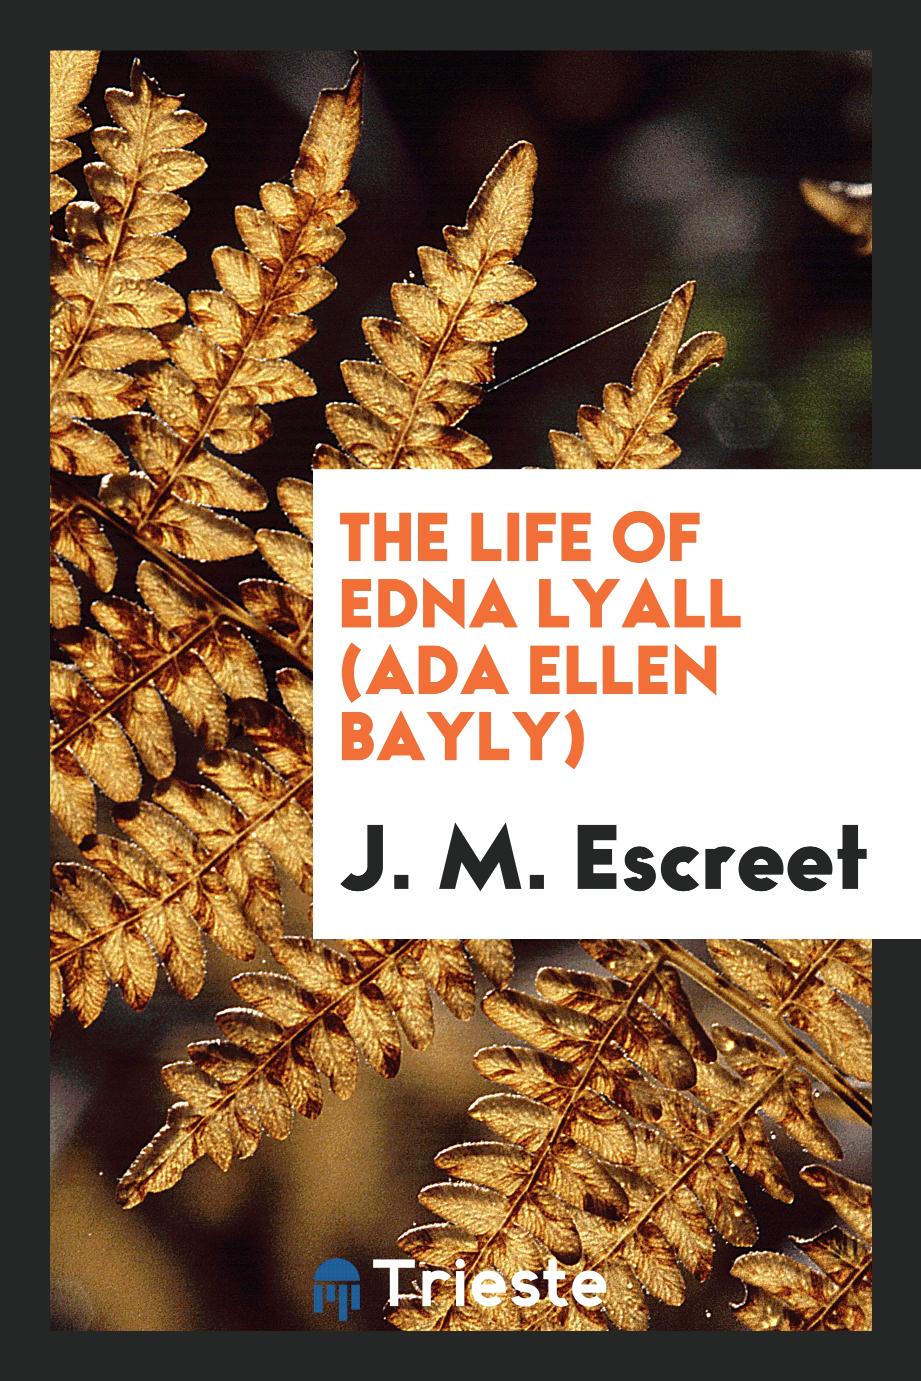 The life of Edna Lyall (Ada Ellen Bayly)